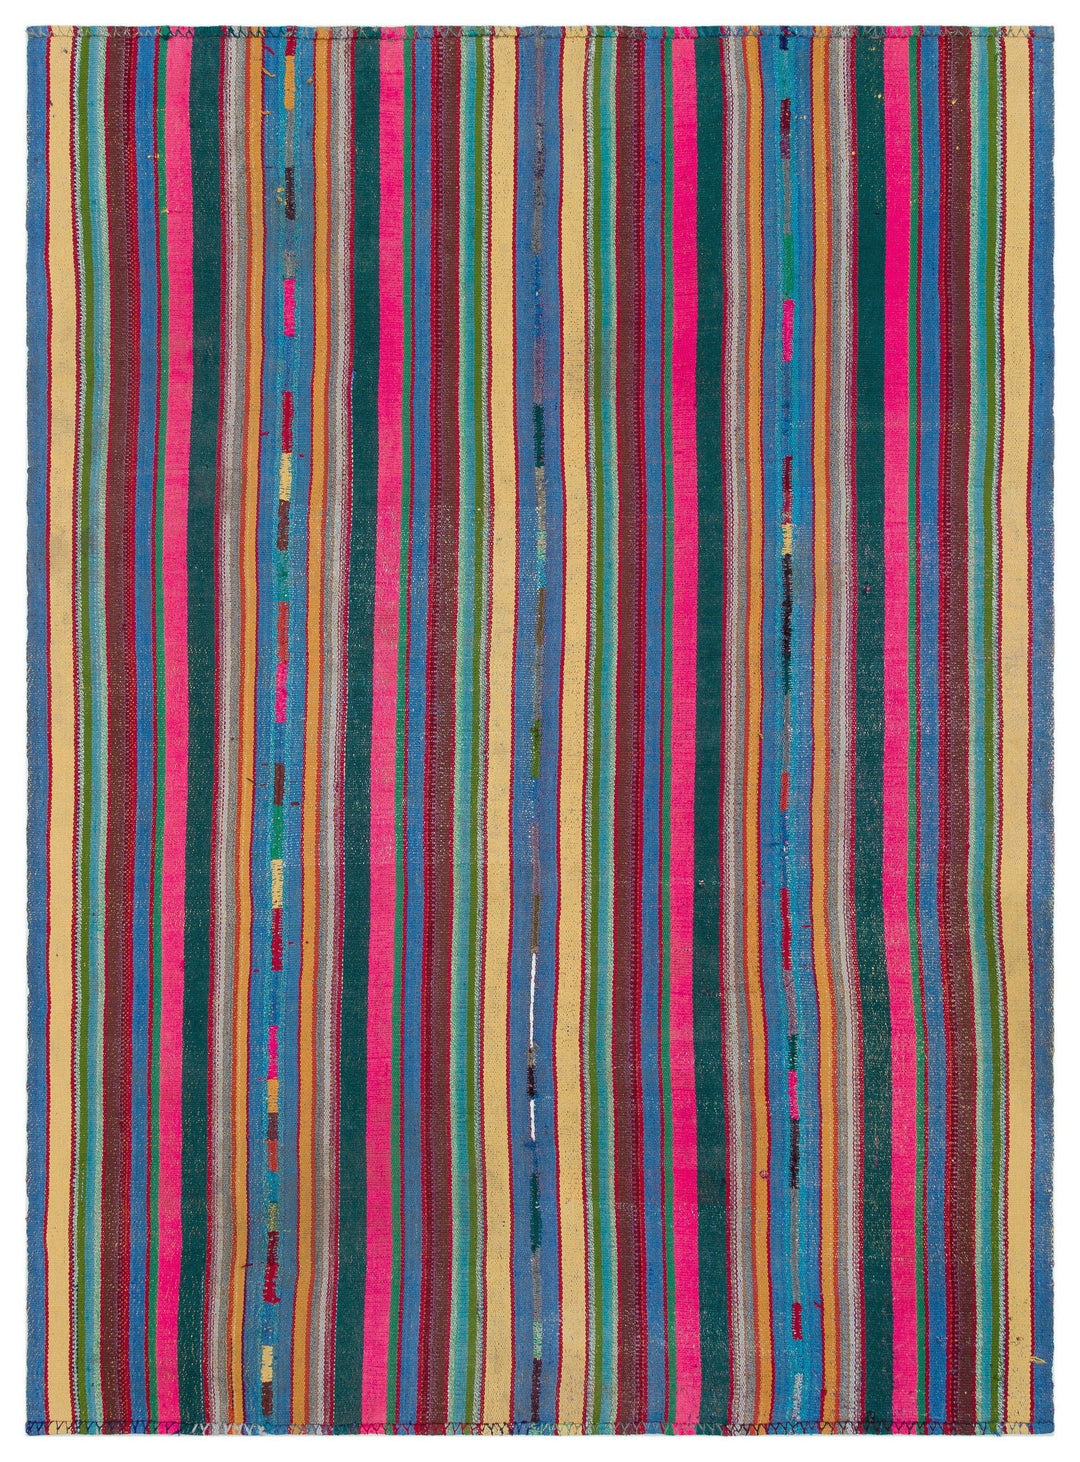 Cretan Beige Striped Wool Hand-Woven Carpet 179 x 254